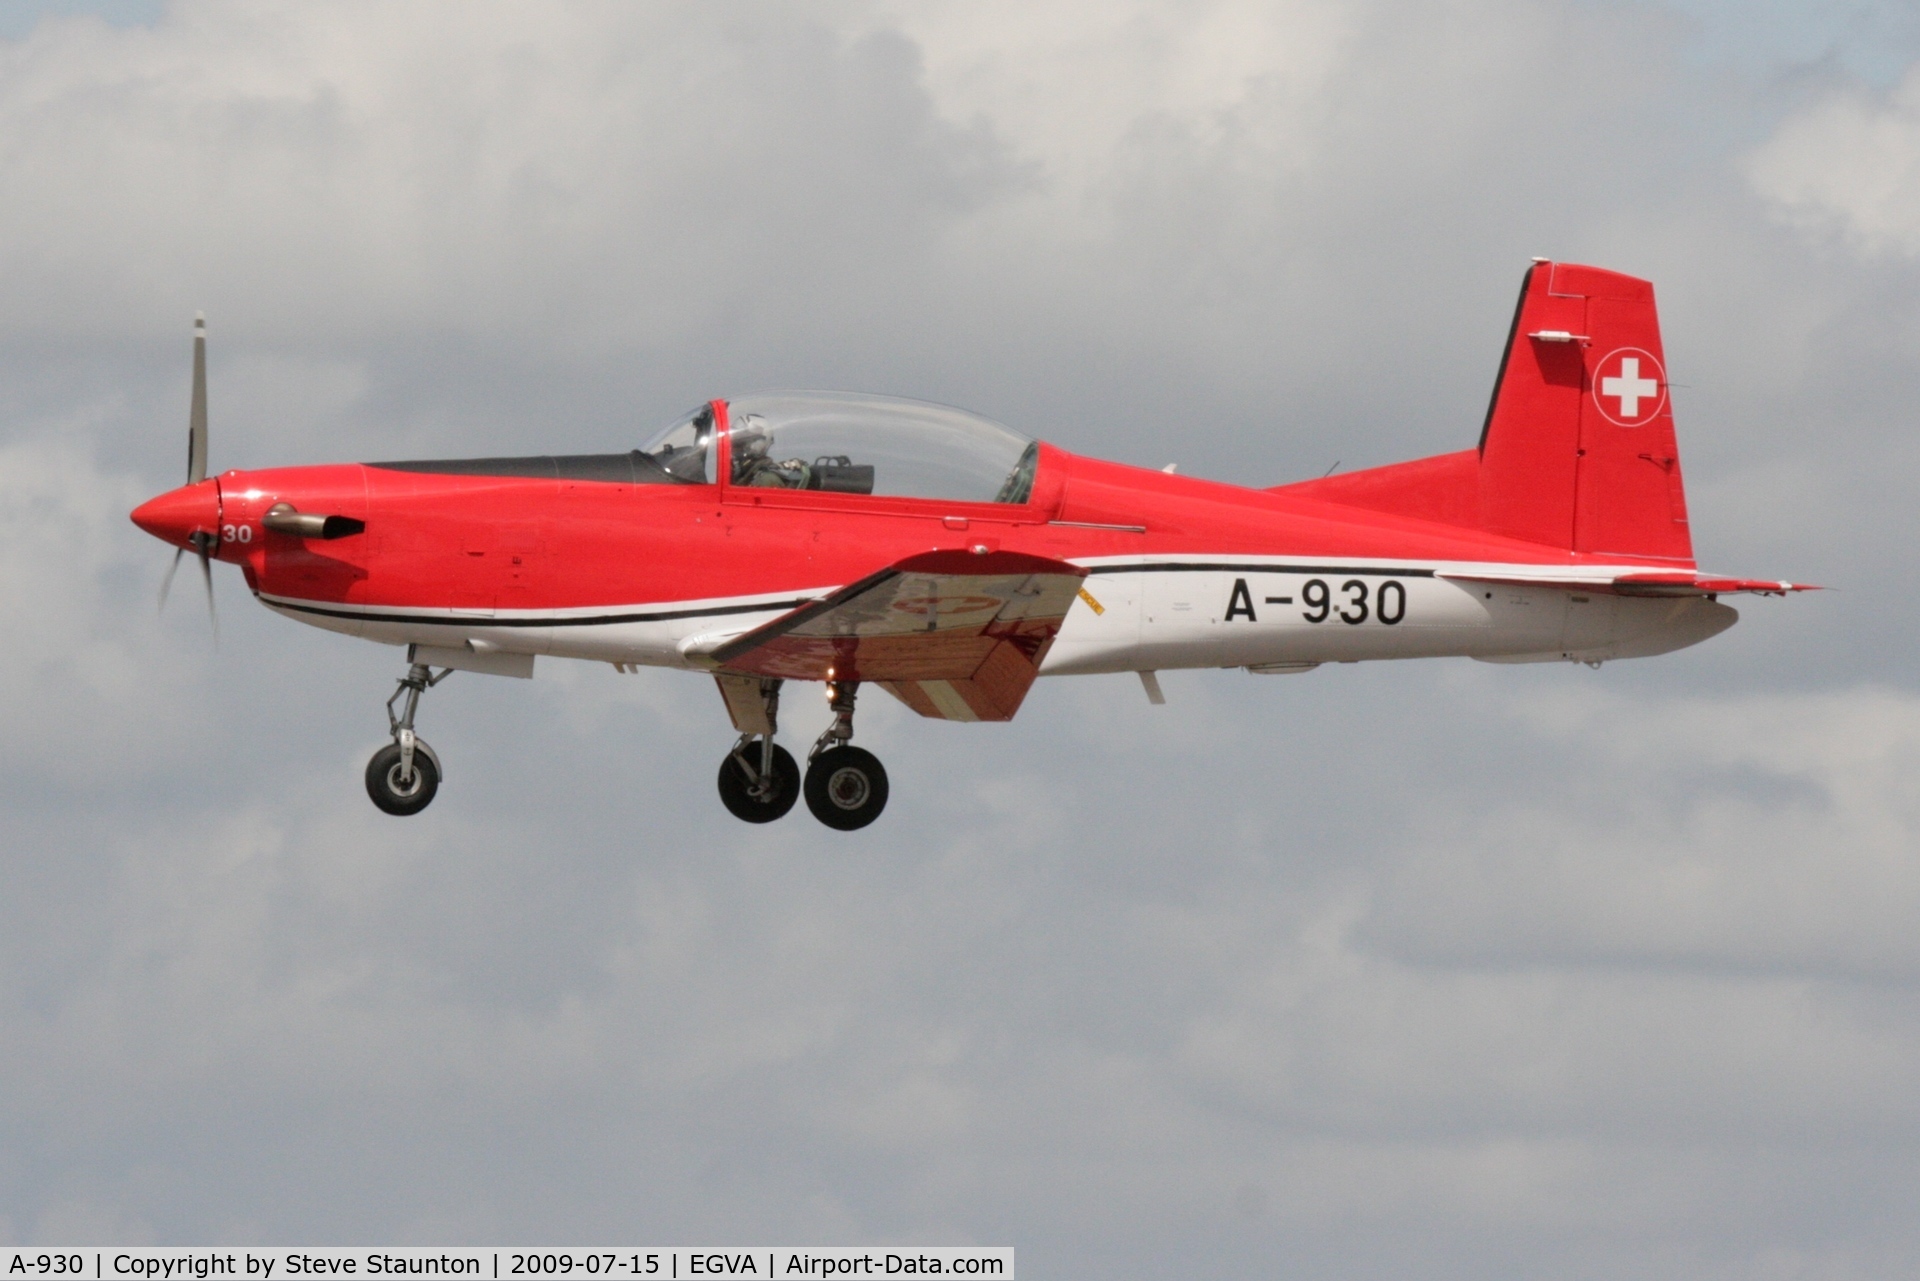 A-930, 1983 Pilatus PC-7 Turbo Trainer C/N 338, Taken at the Royal International Air Tattoo 2009